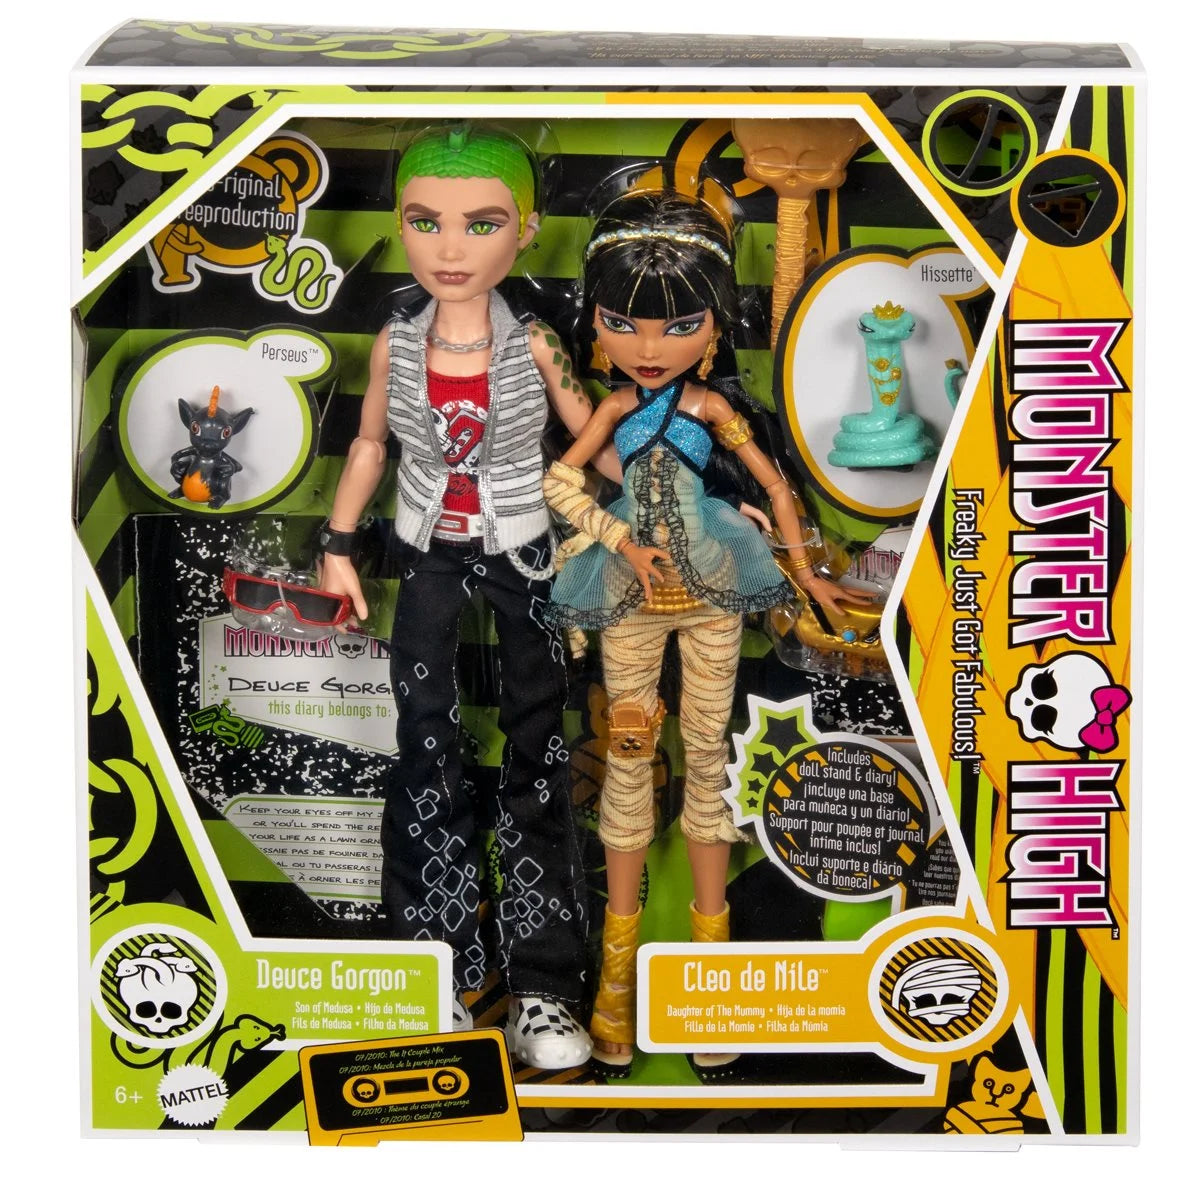 Booriginal Creeproduction Cleo De Nile and Deuce Gorgon Collectible Doll Set